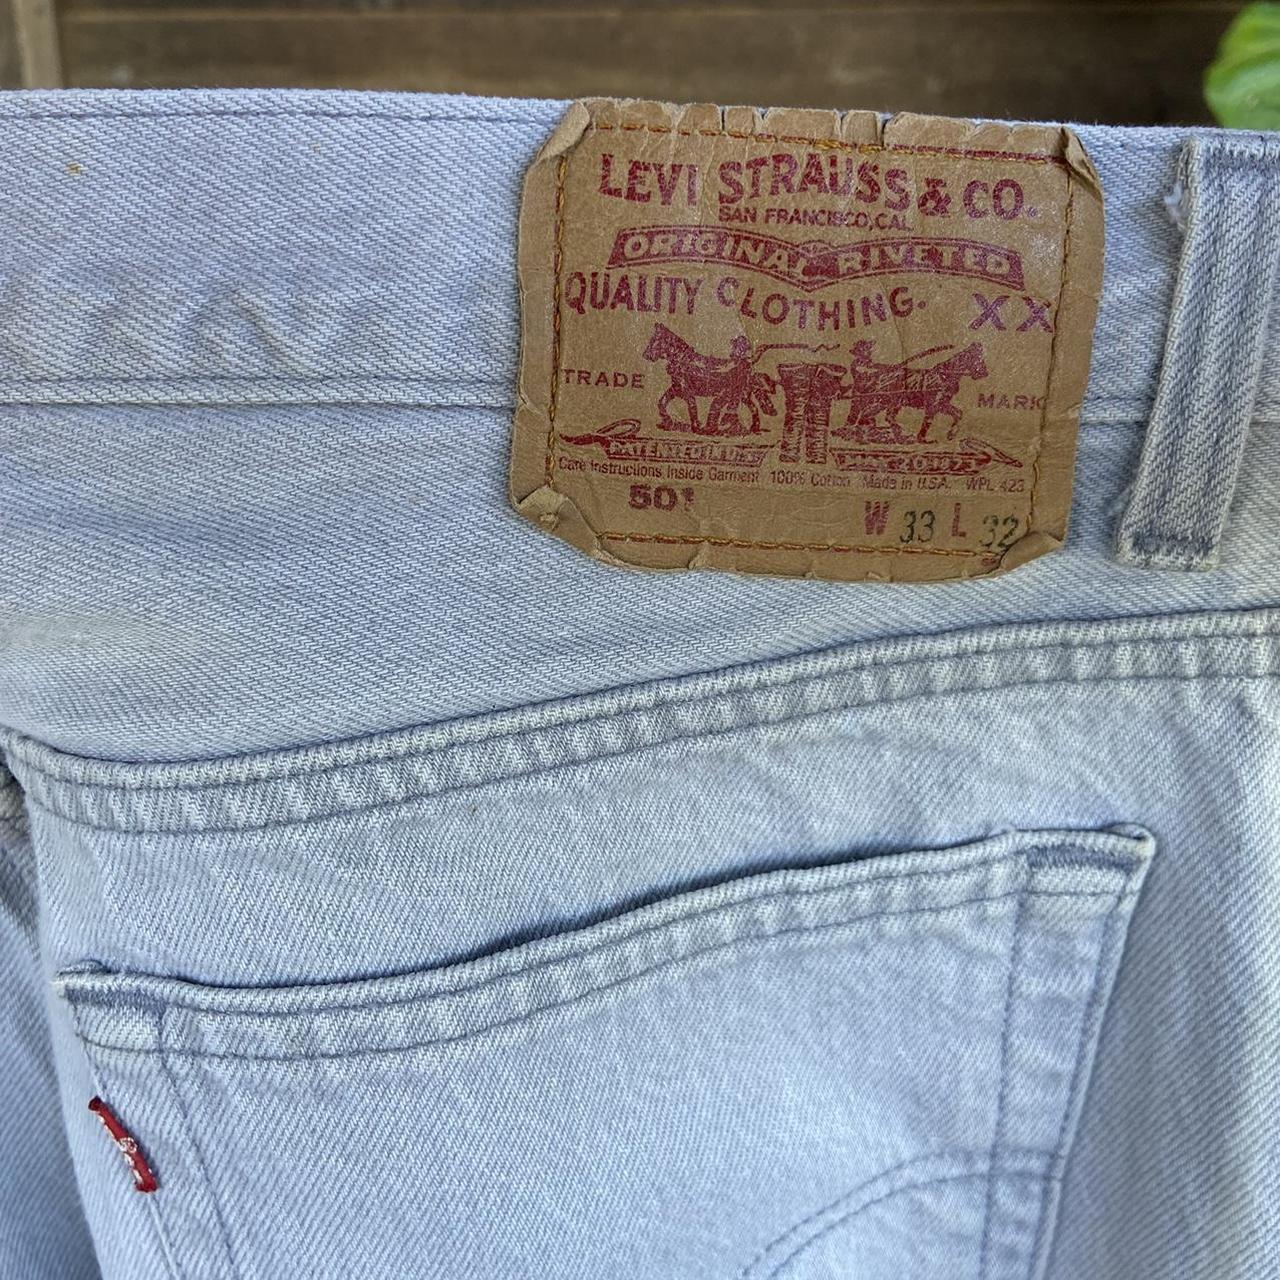 Light grey 1980s Levi strauss 501 jeans good... - Depop